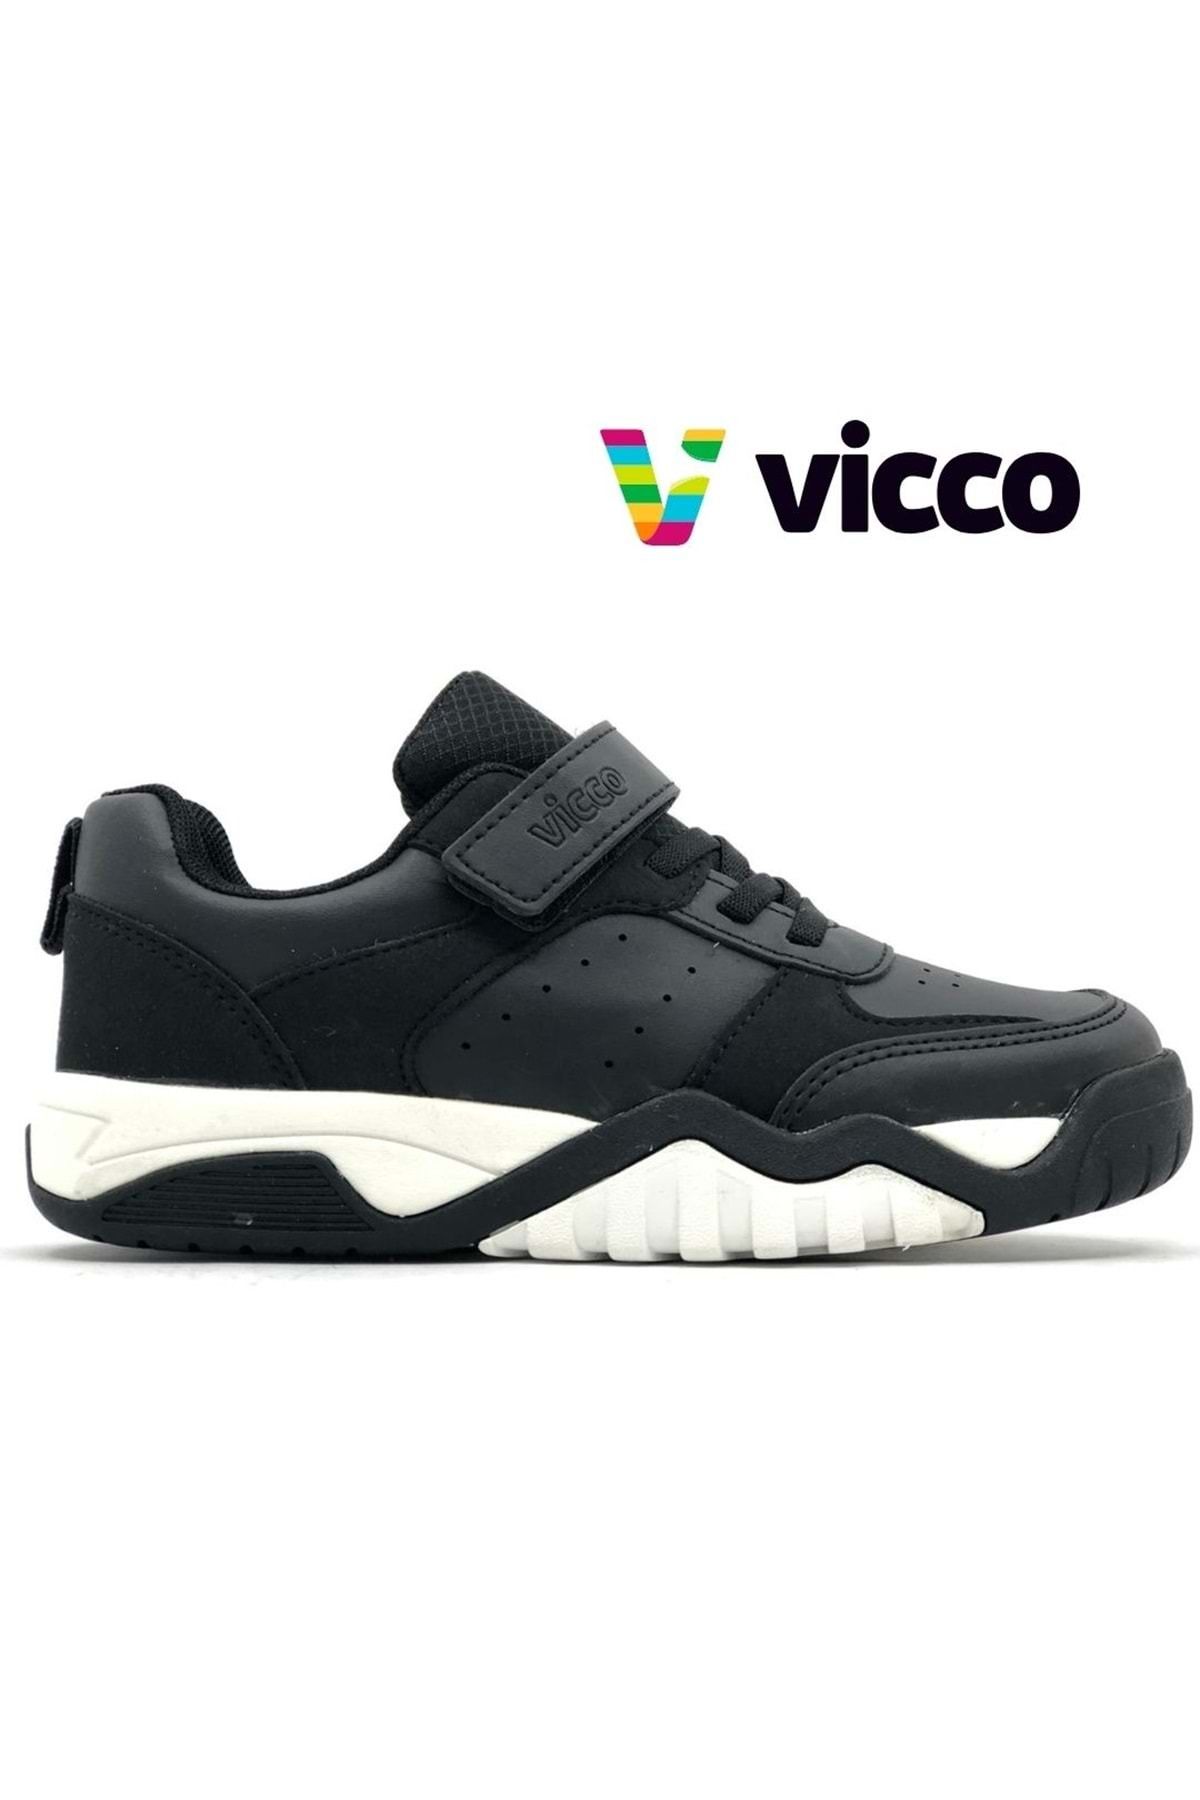 Vicco Maxi Sneaker Ortopedik Çocuk Spor Ayakkabı Siyah